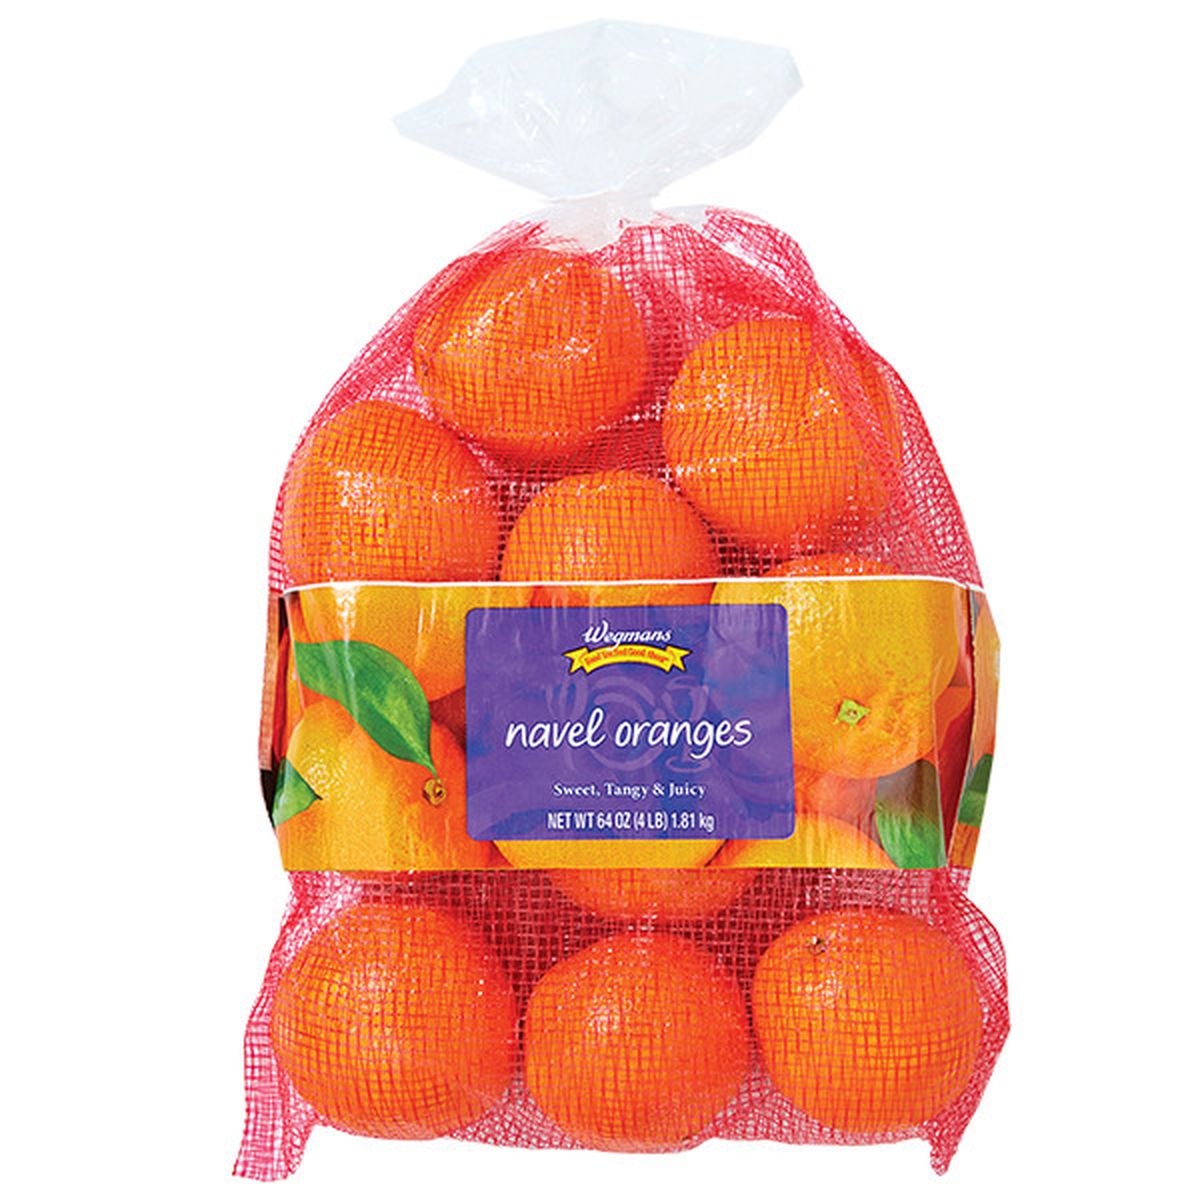 Calories in Wegmans Navel Oranges, Bagged